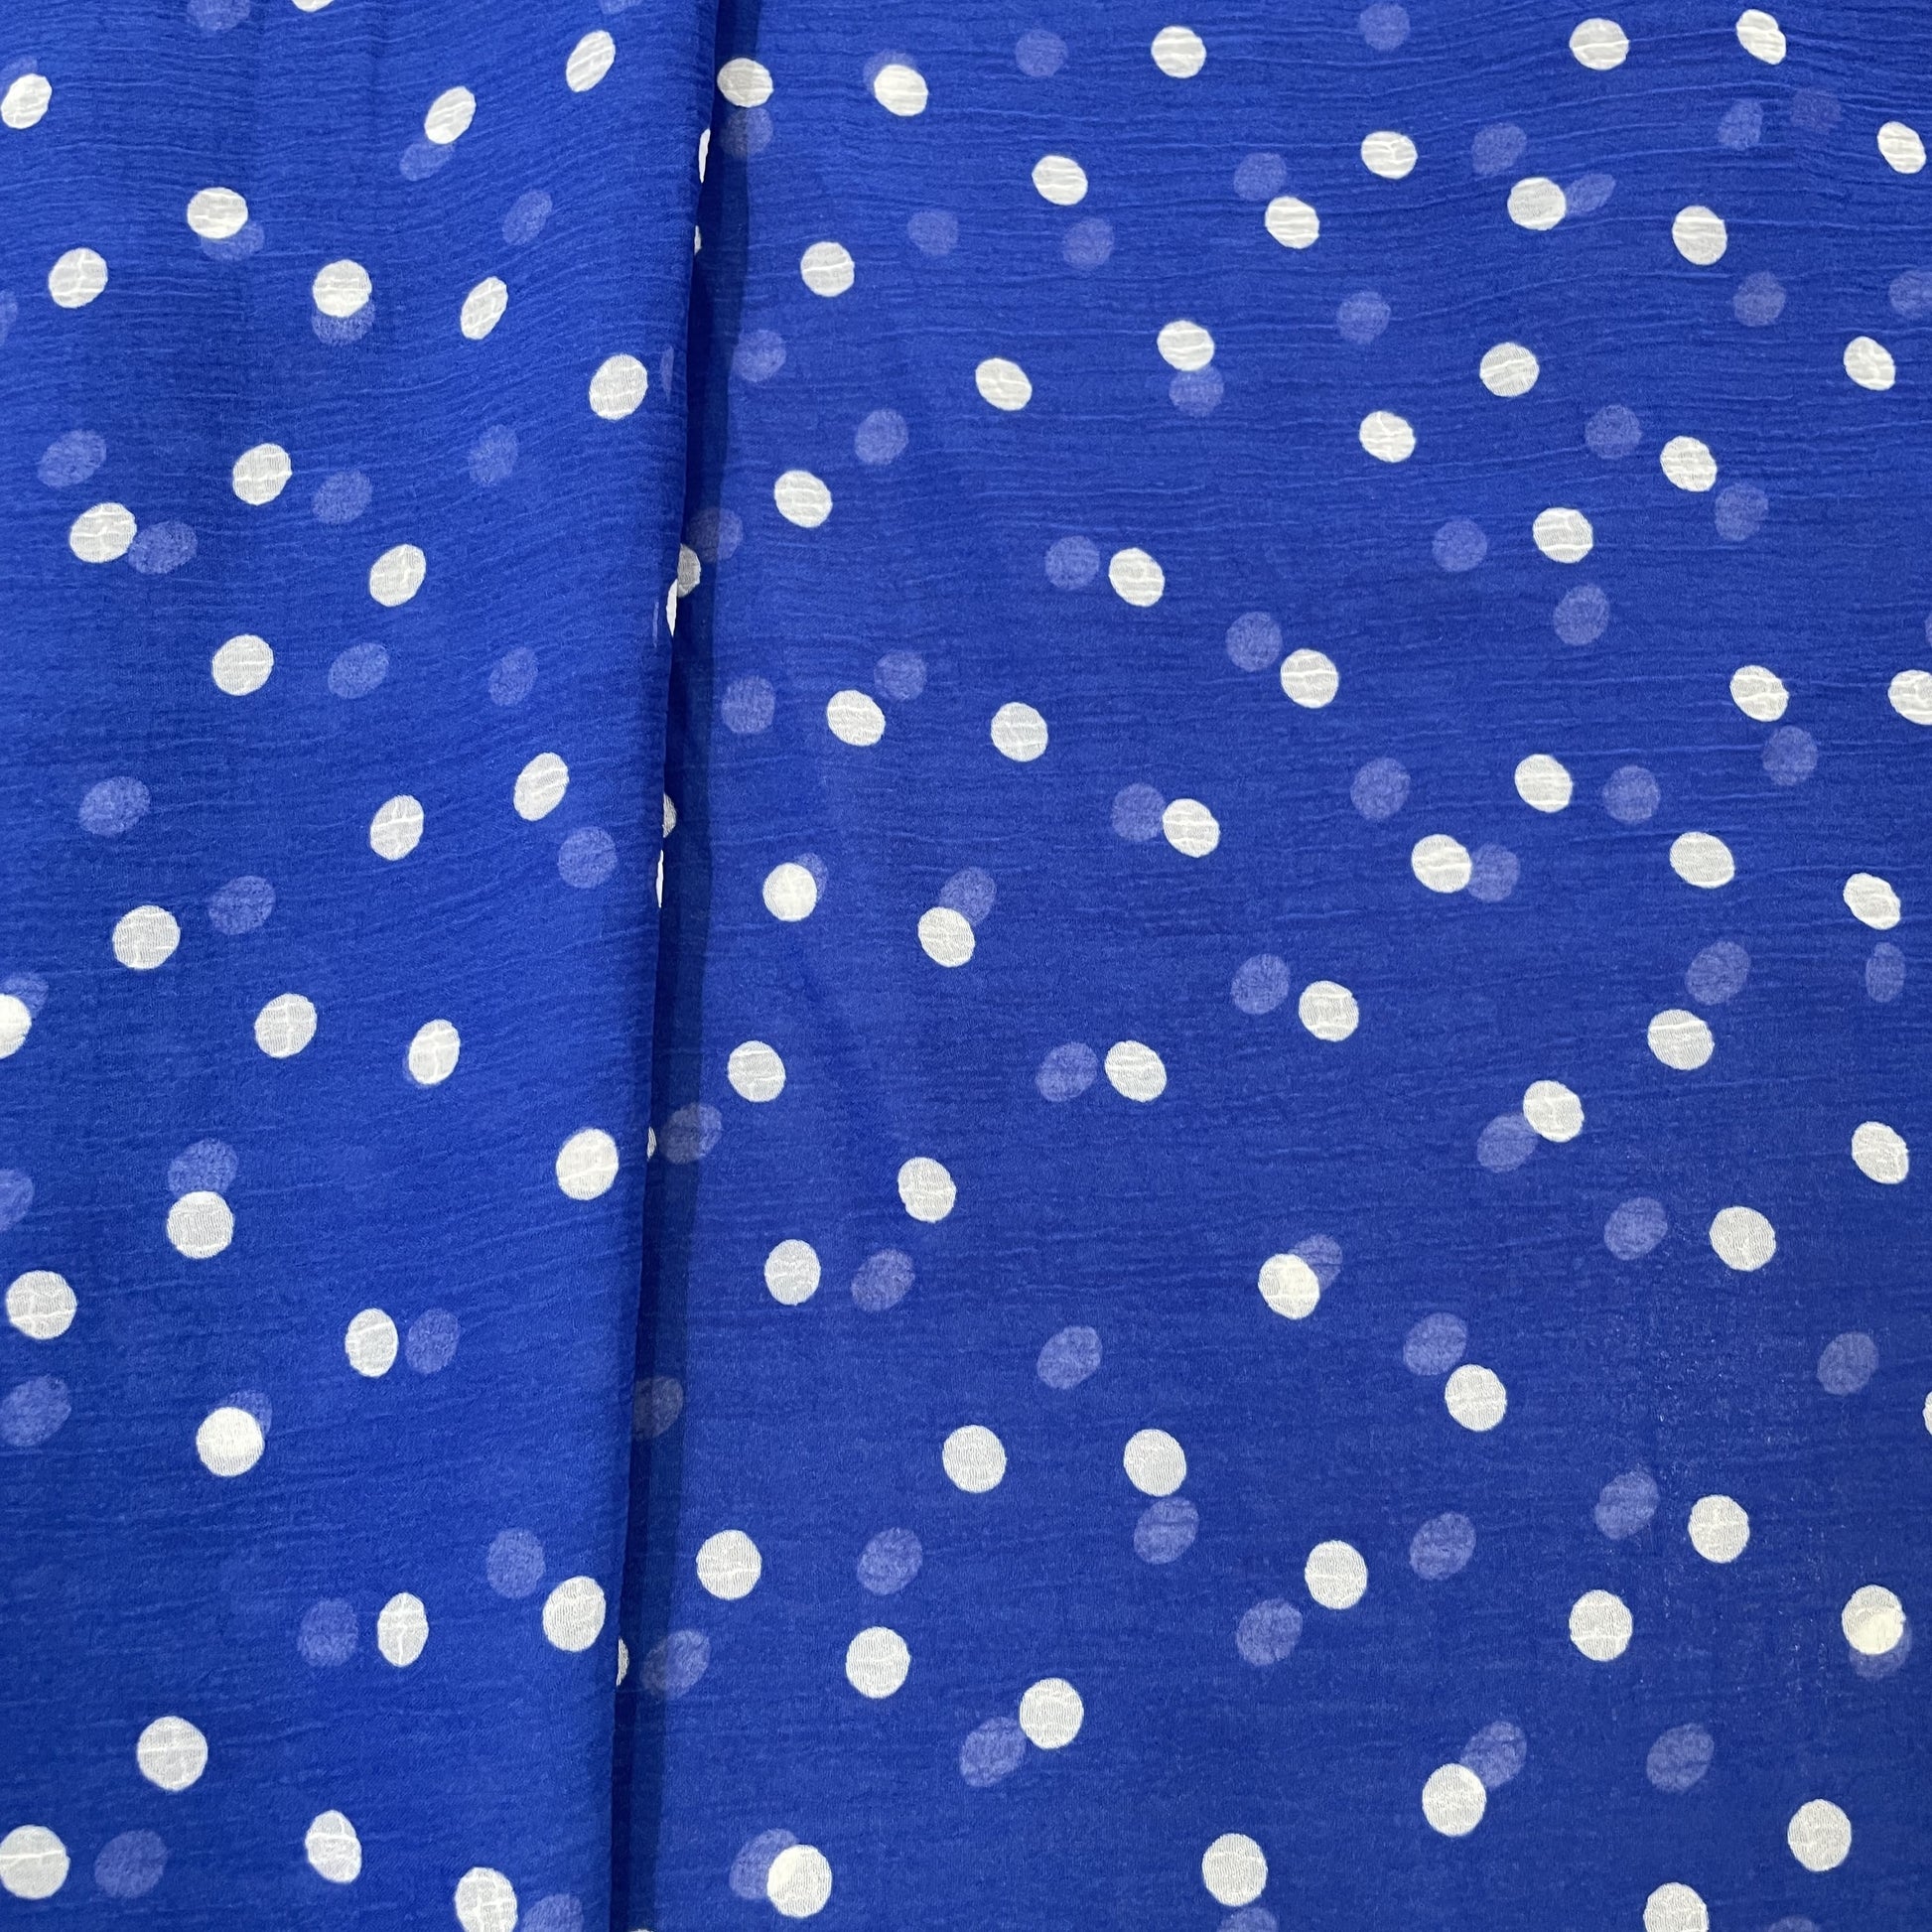 Premium Navy Blue & White Polka Dot Print Georgette Fabric